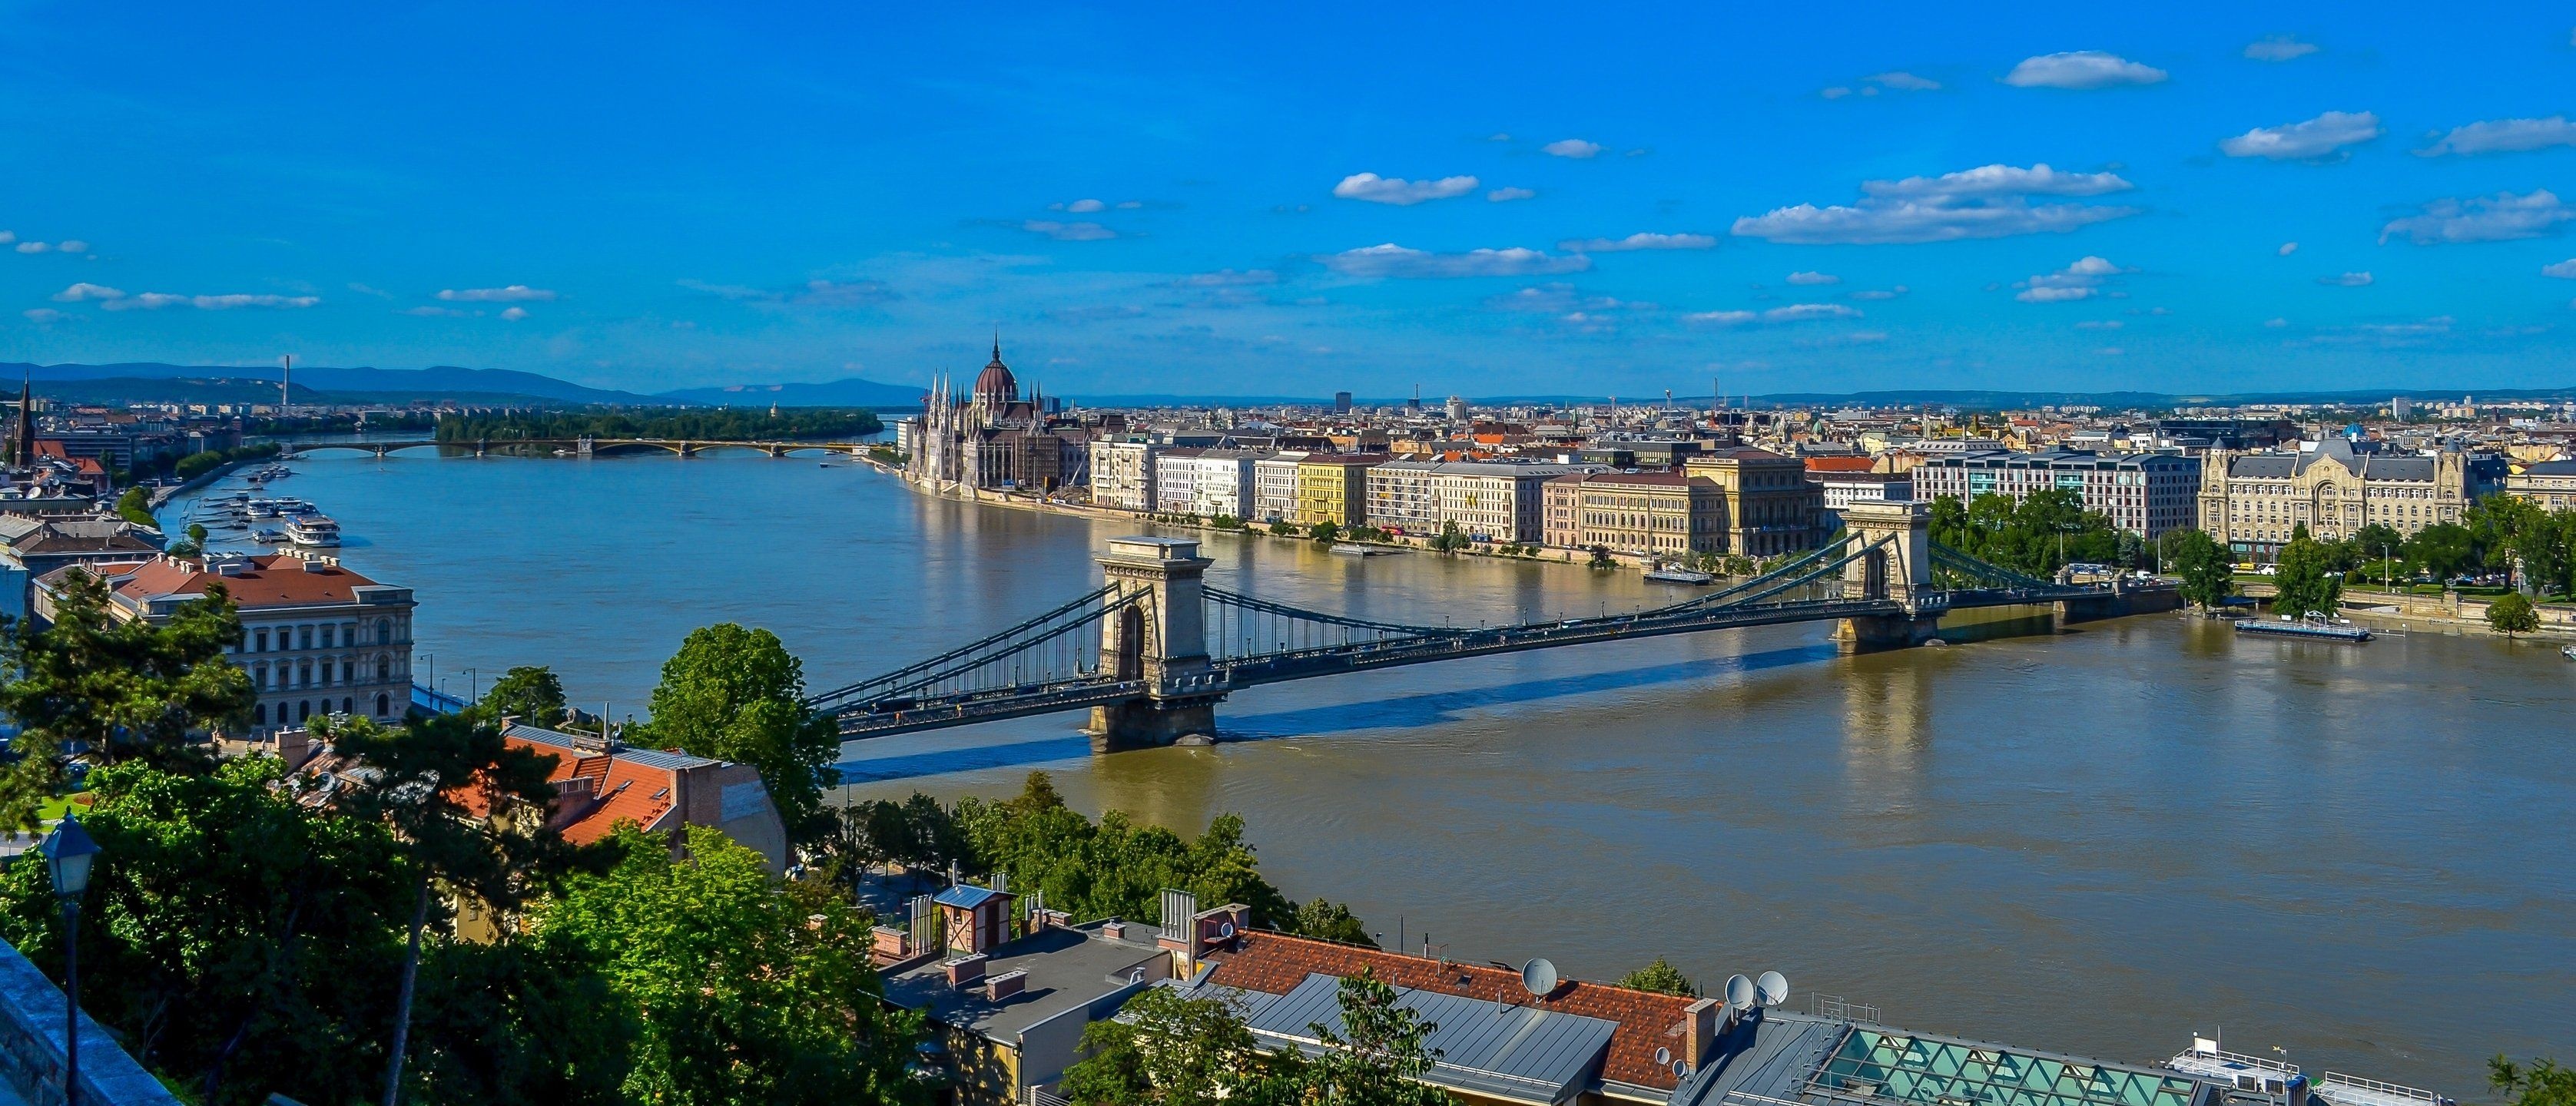 The Danube River, Travels, River landscapes, European beauty, 3360x1440 Dual Screen Desktop